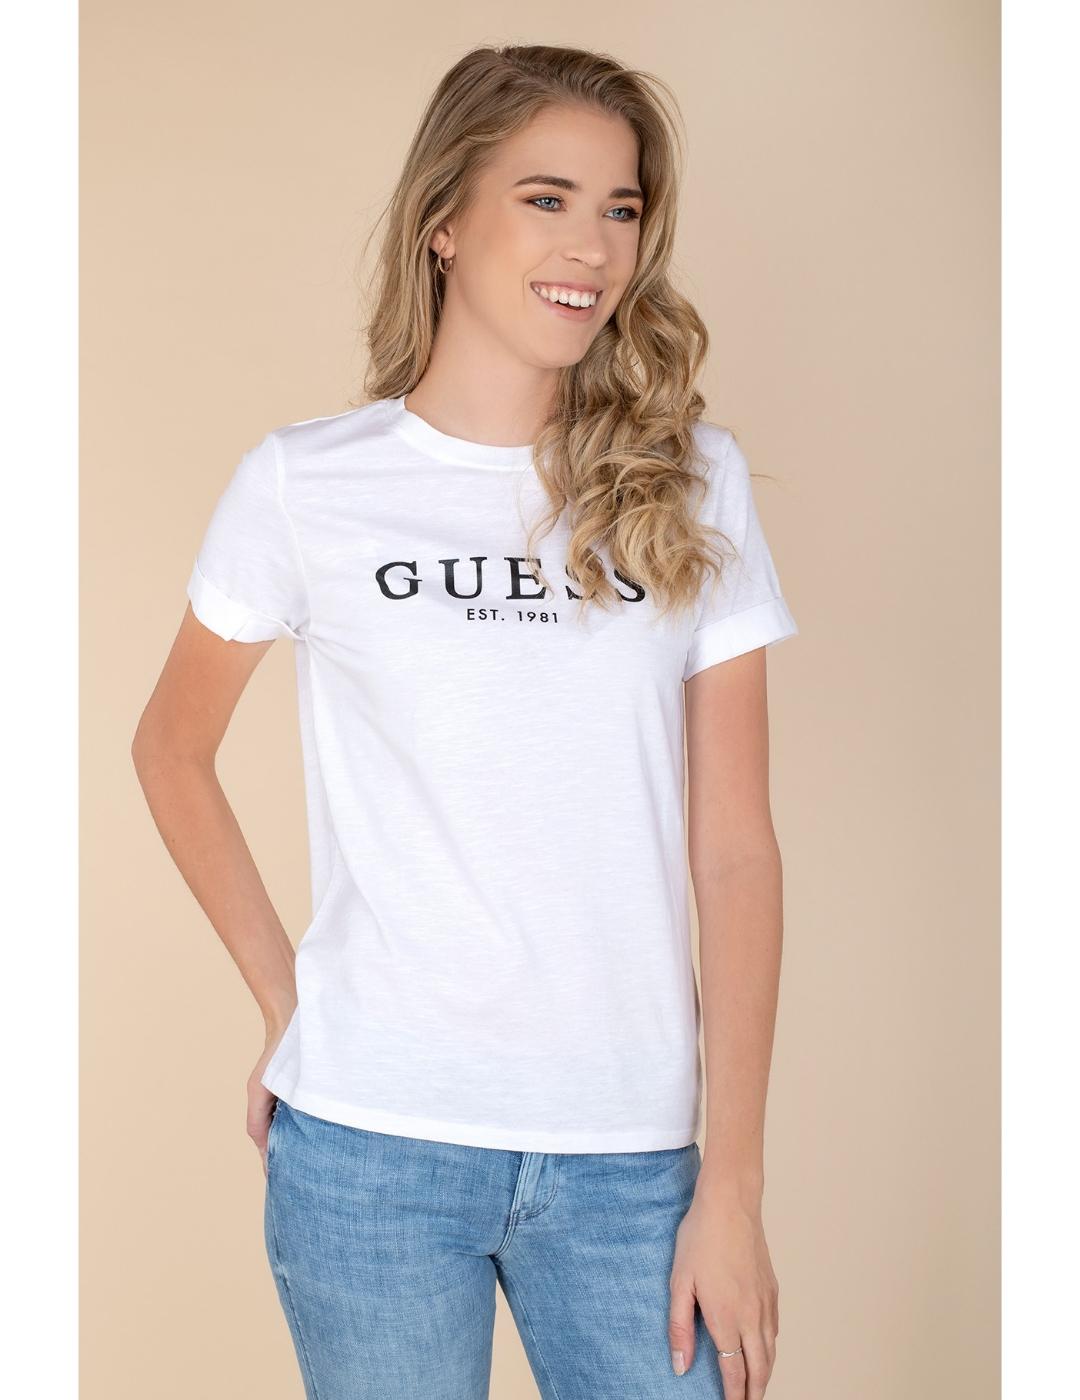 Camiseta Guess 1981 blanca mujer